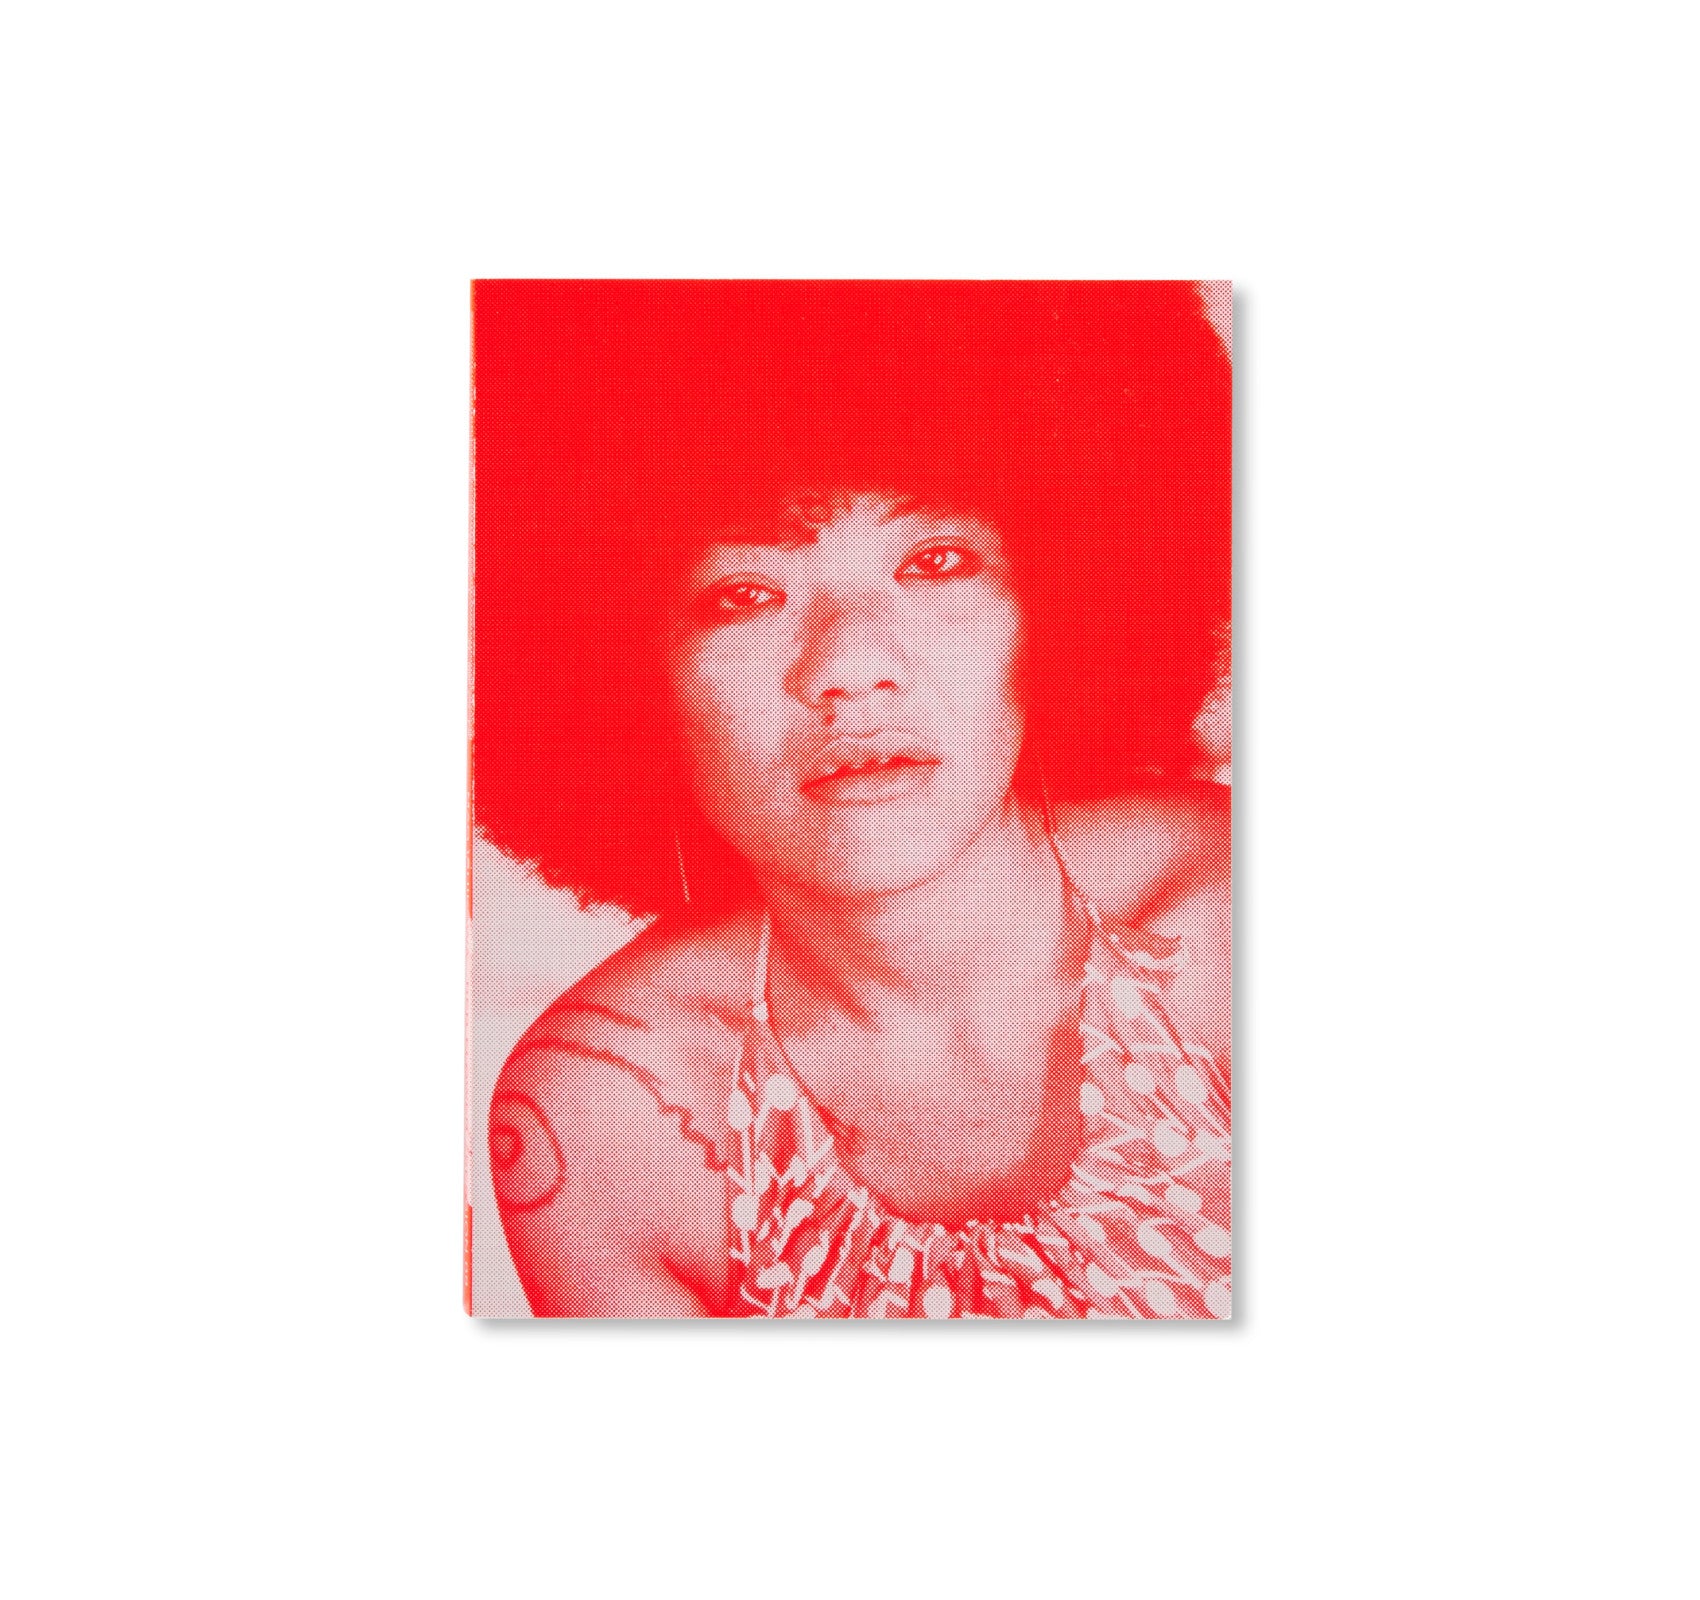 RED FLOWER, THE WOMEN OF OKINAWA / 赤花 アカバナー、沖縄の女 by Mao Ishikawa [SECOND EDITION]